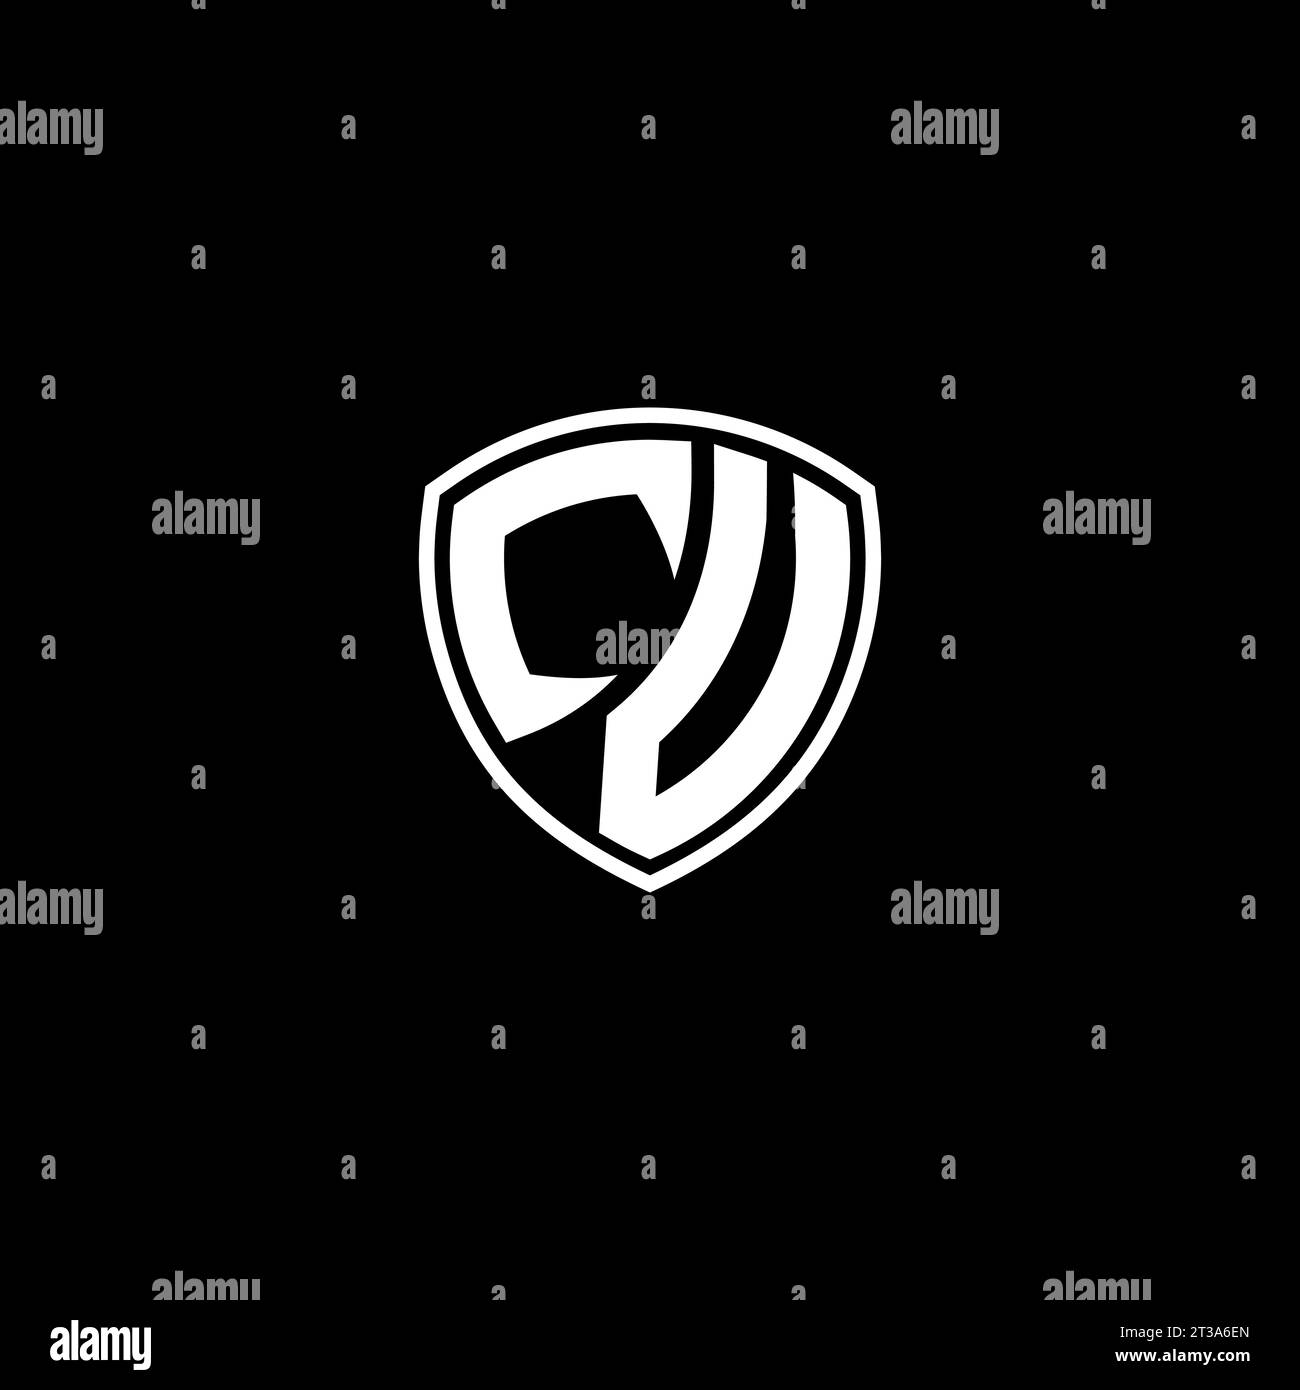 CV logo monogram emblem style with shield shape design template ideas Stock Vector